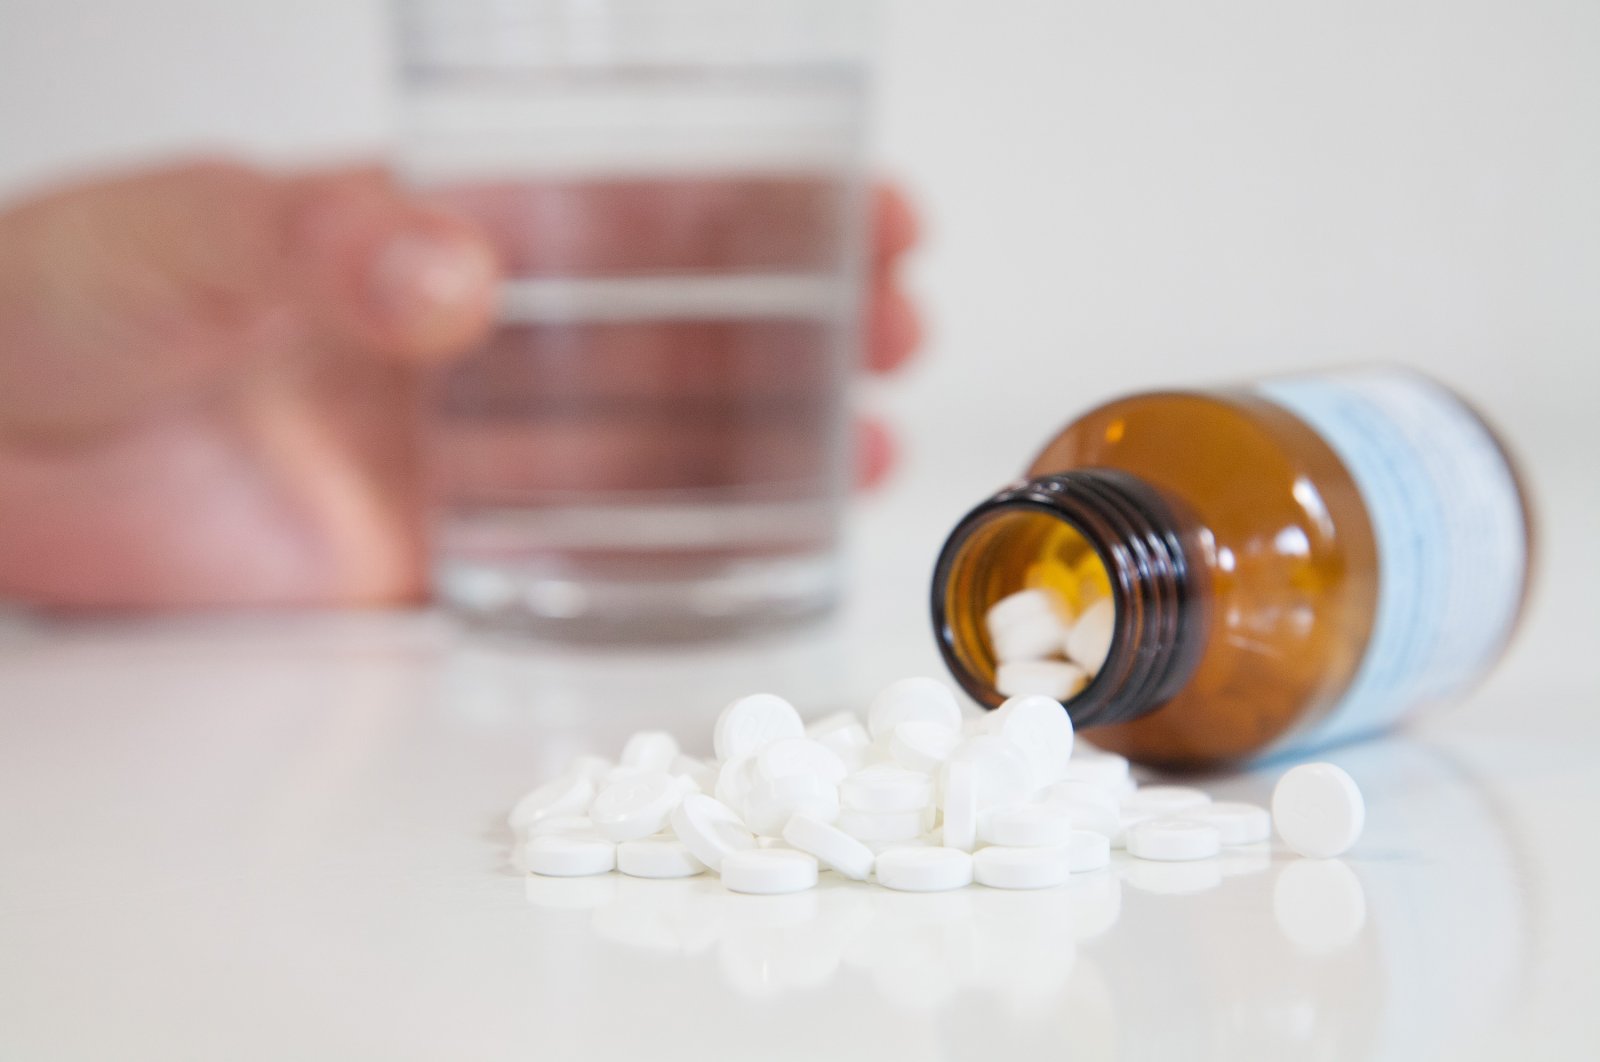 Penggunaan antidepresan jangka panjang terkait dengan peningkatan penyakit jantung